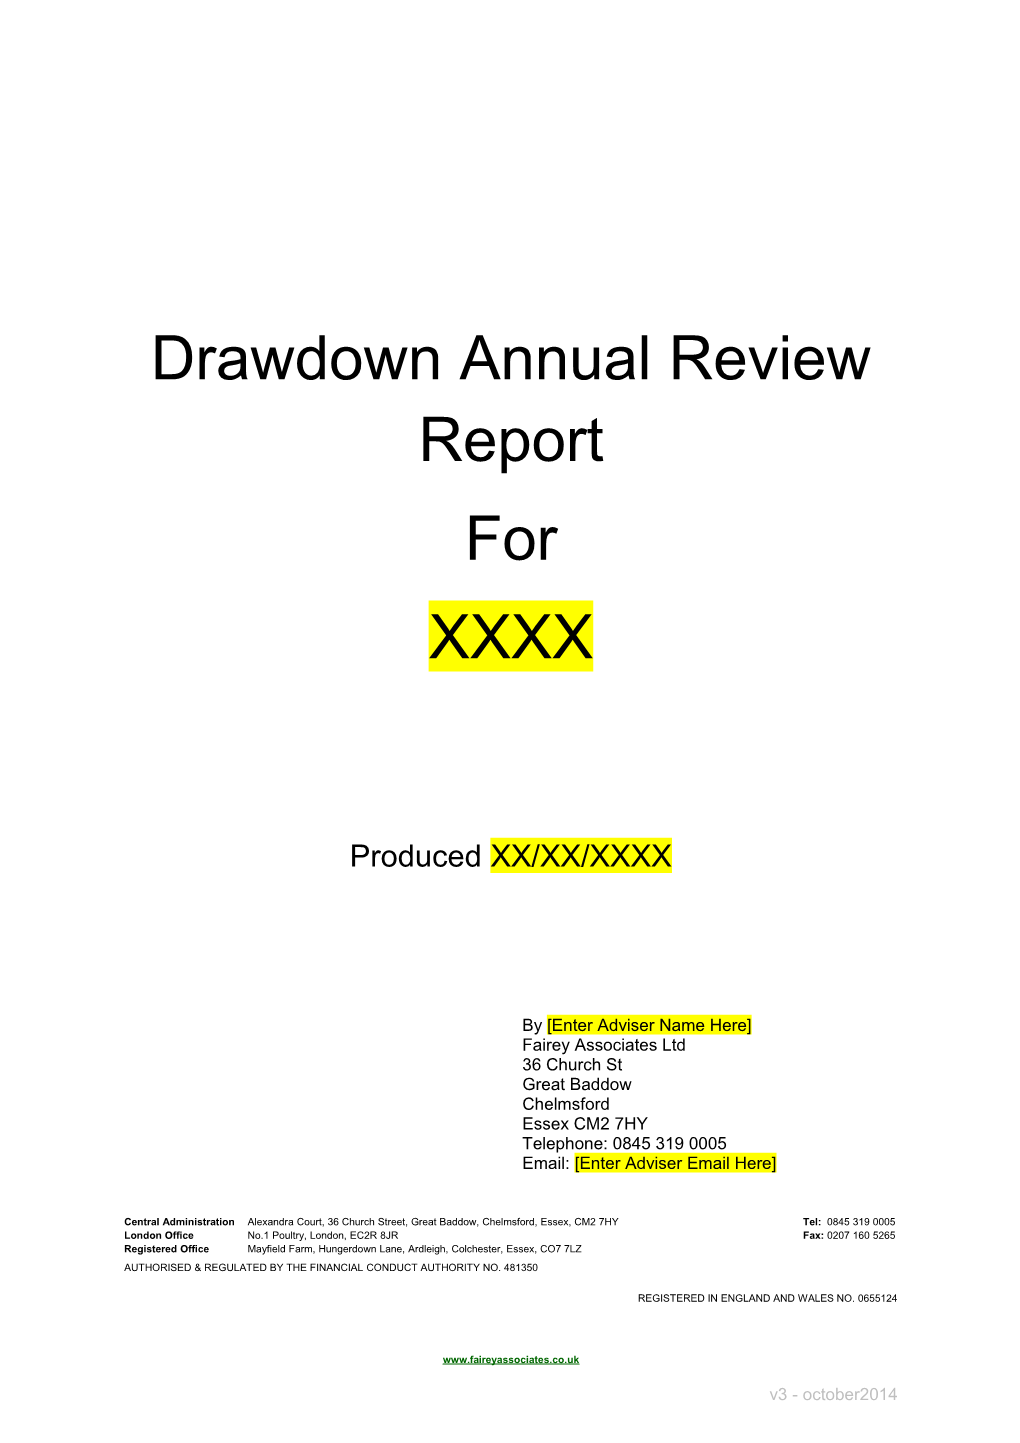 Drawdown Annual Review Report